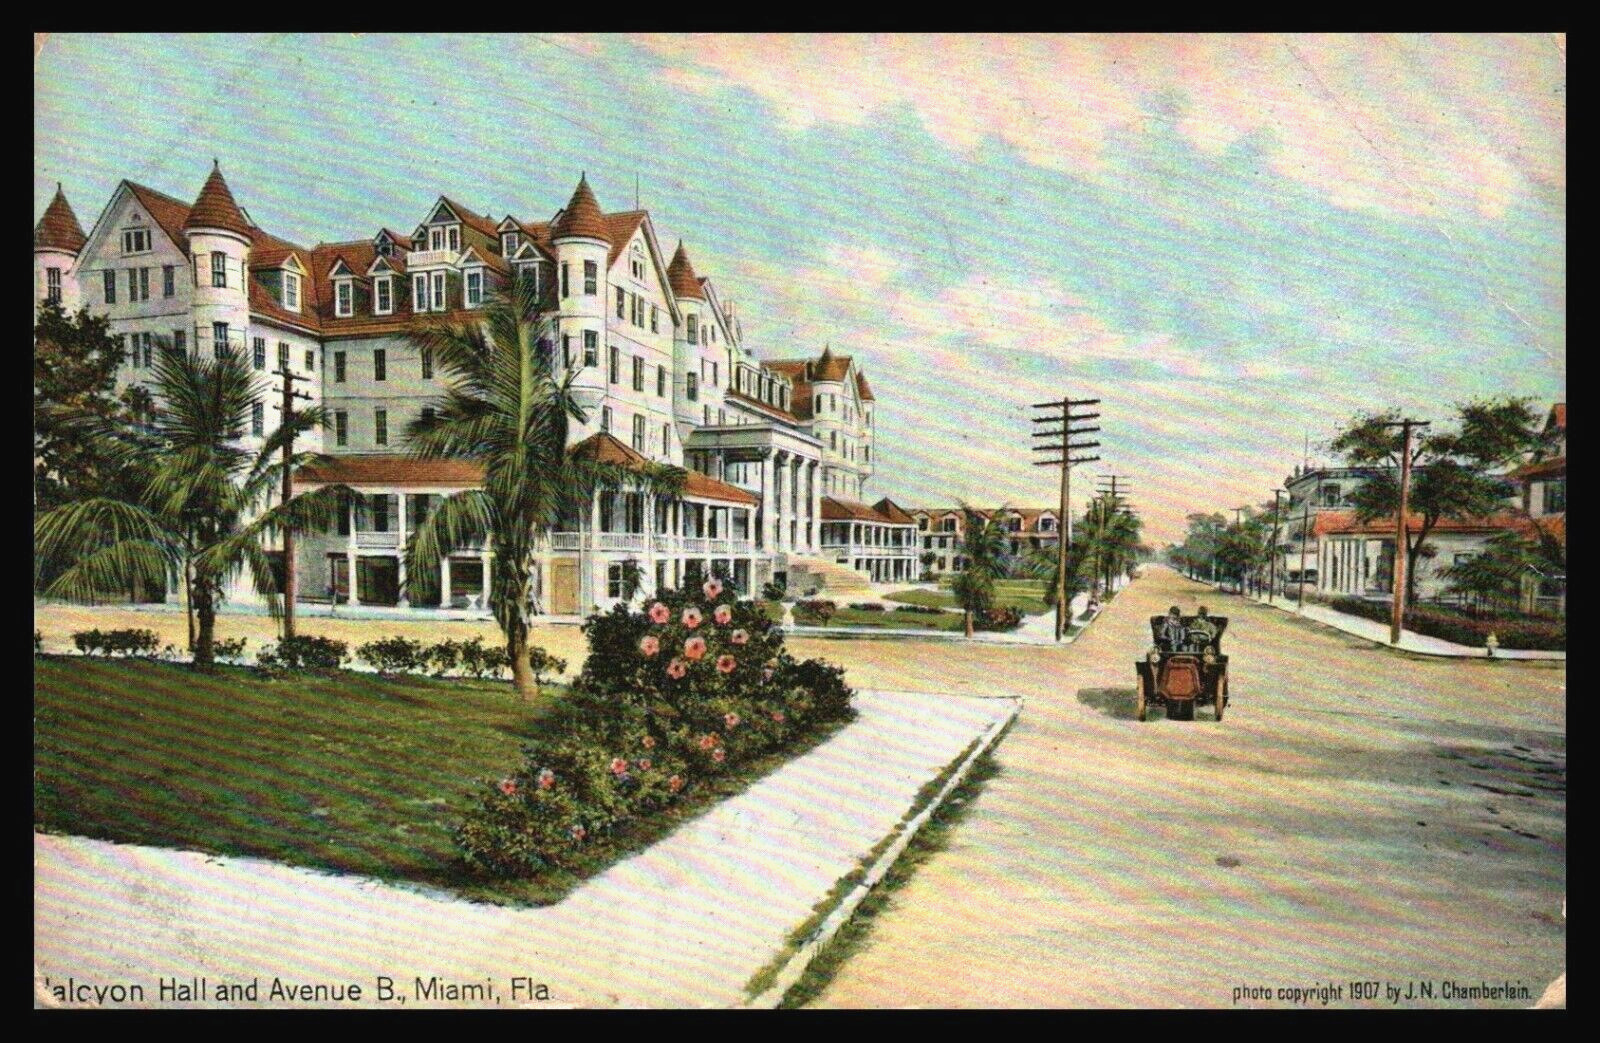 HALCYON HALL HOTEL MIAMI FLORIDA Flagler & 2nd 1906-1937 JN CHAMBERLAIN C 1910S